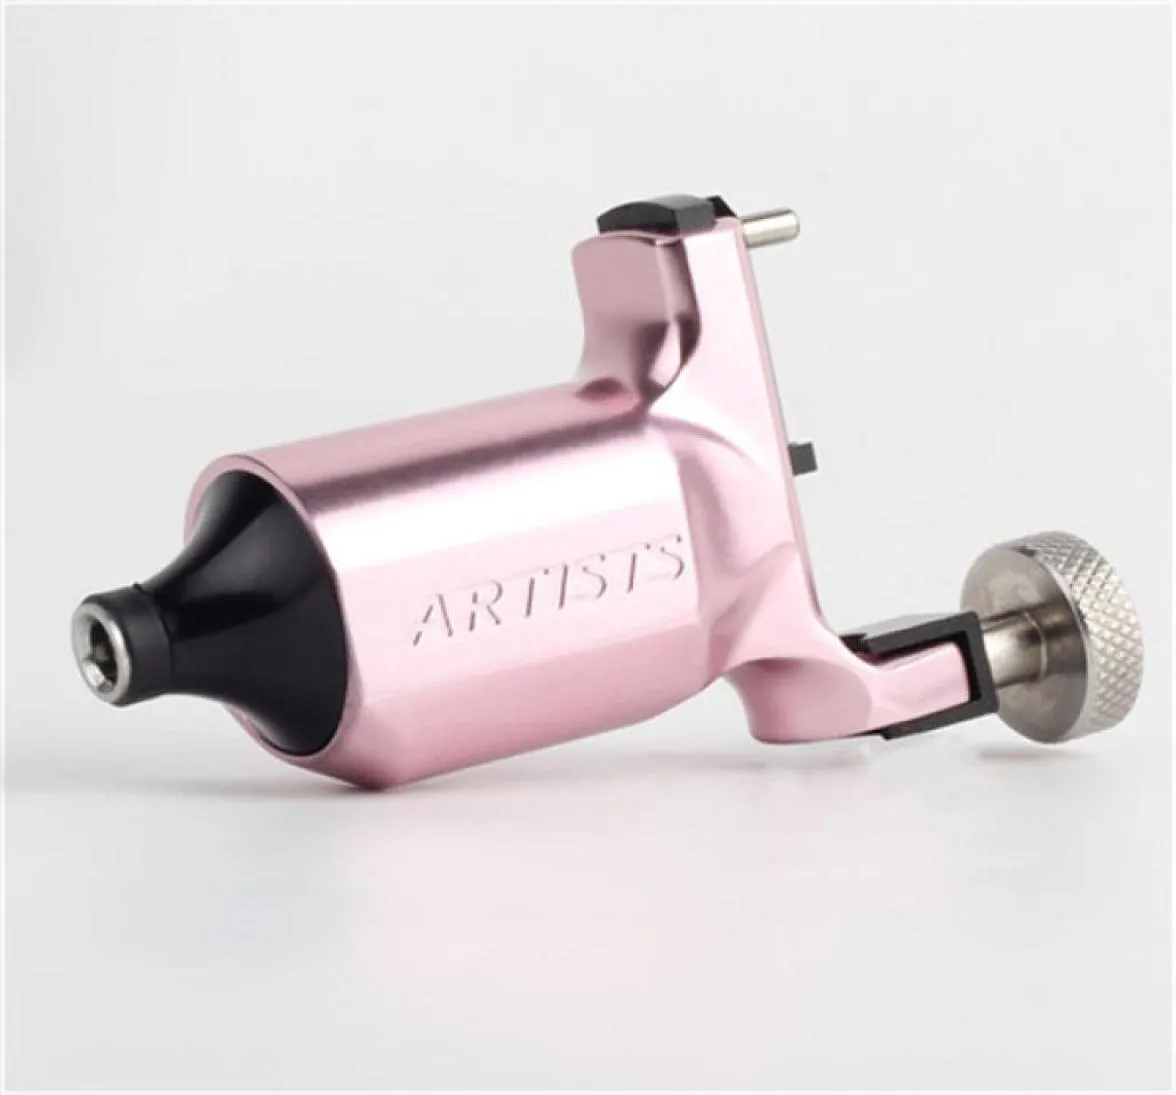 Artist Rotary Pink Tattoo Machine Swiss Motor Liner Shader Supply With Rotary Tattoo Gun For Tattoo Artist For 8952402